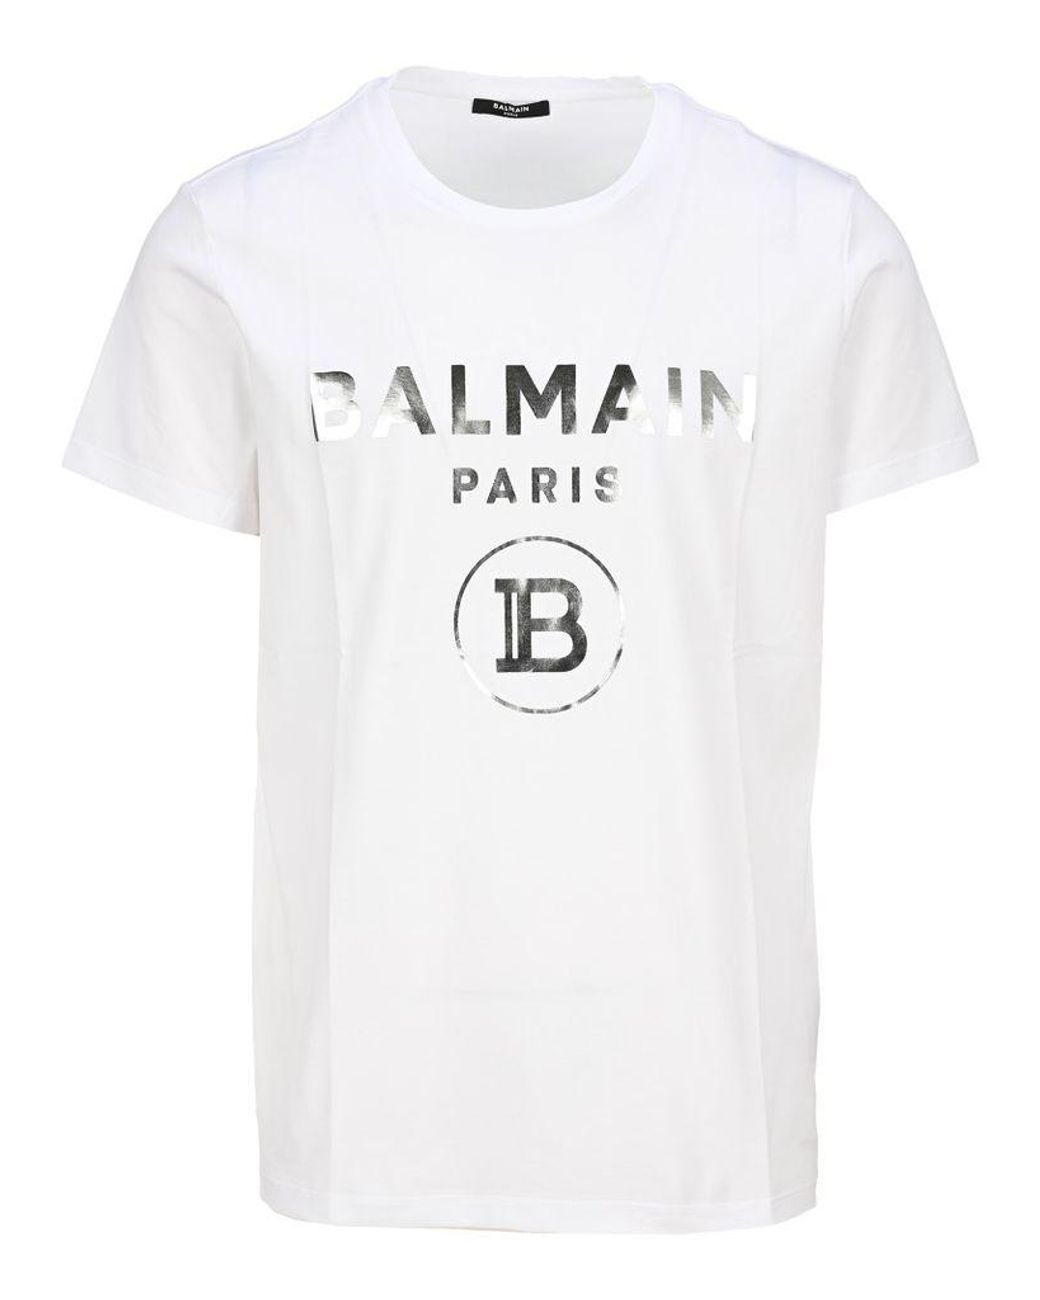 Balmain Metallic Silver Logo T-shirt in White for Men - Lyst